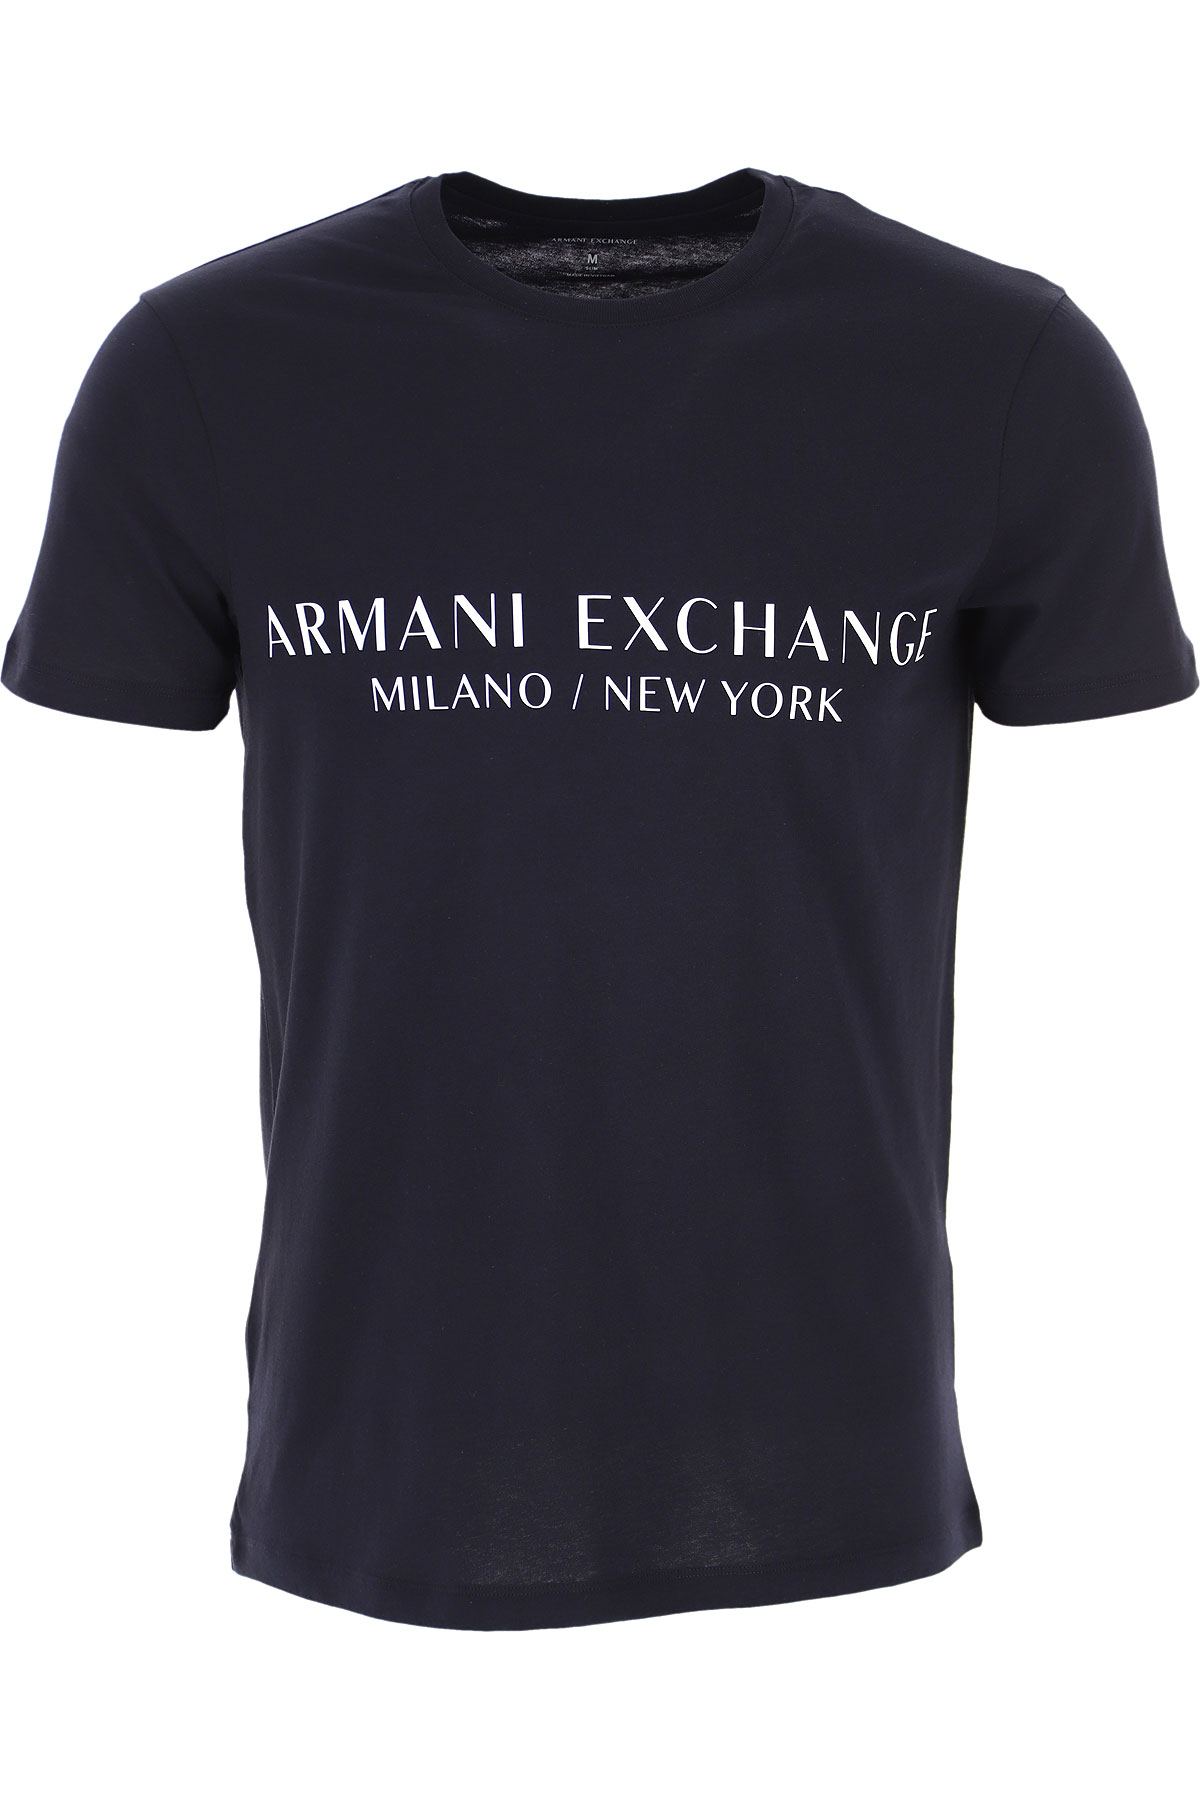 Mens Clothing Armani Exchange, Style code: 8nzt72-z8h4z-1510